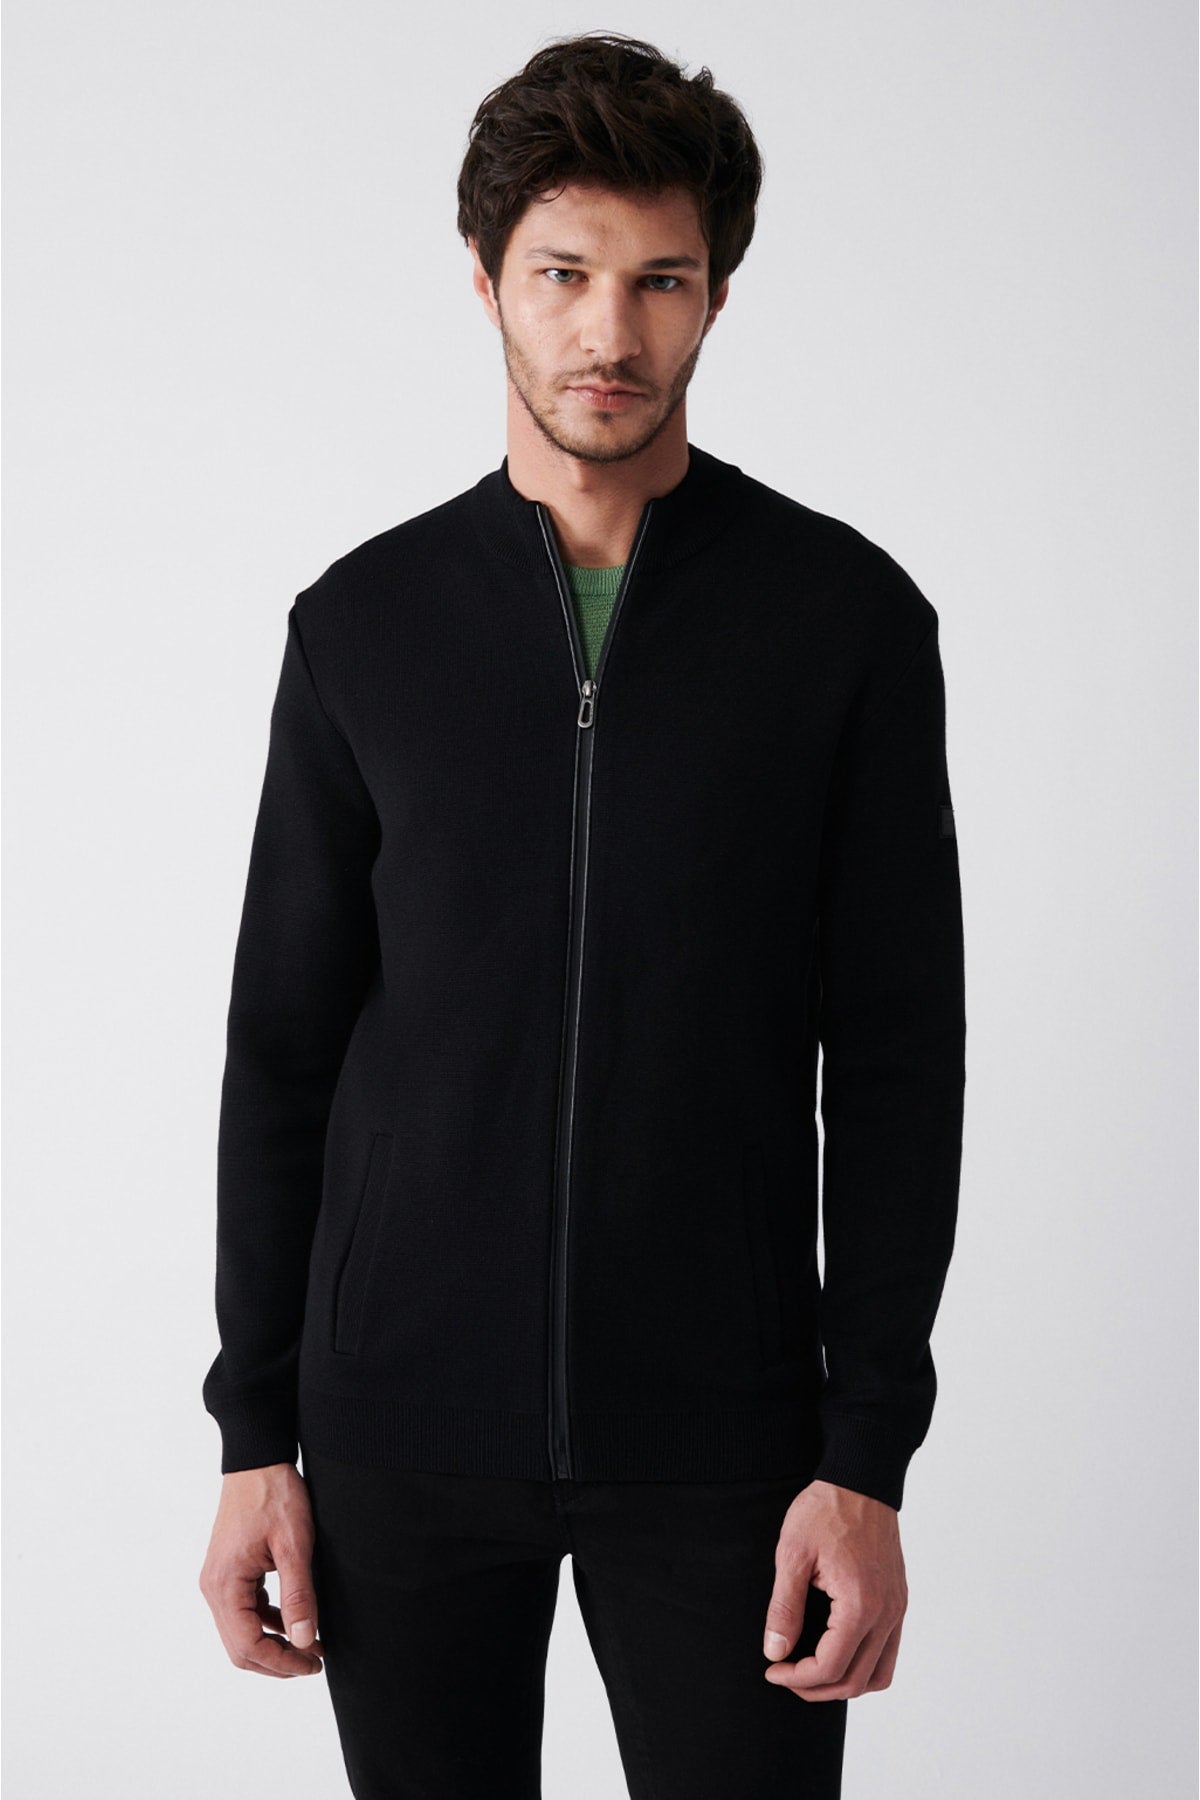 Men's black upright collar zipper knitwear cardigan A31y5101